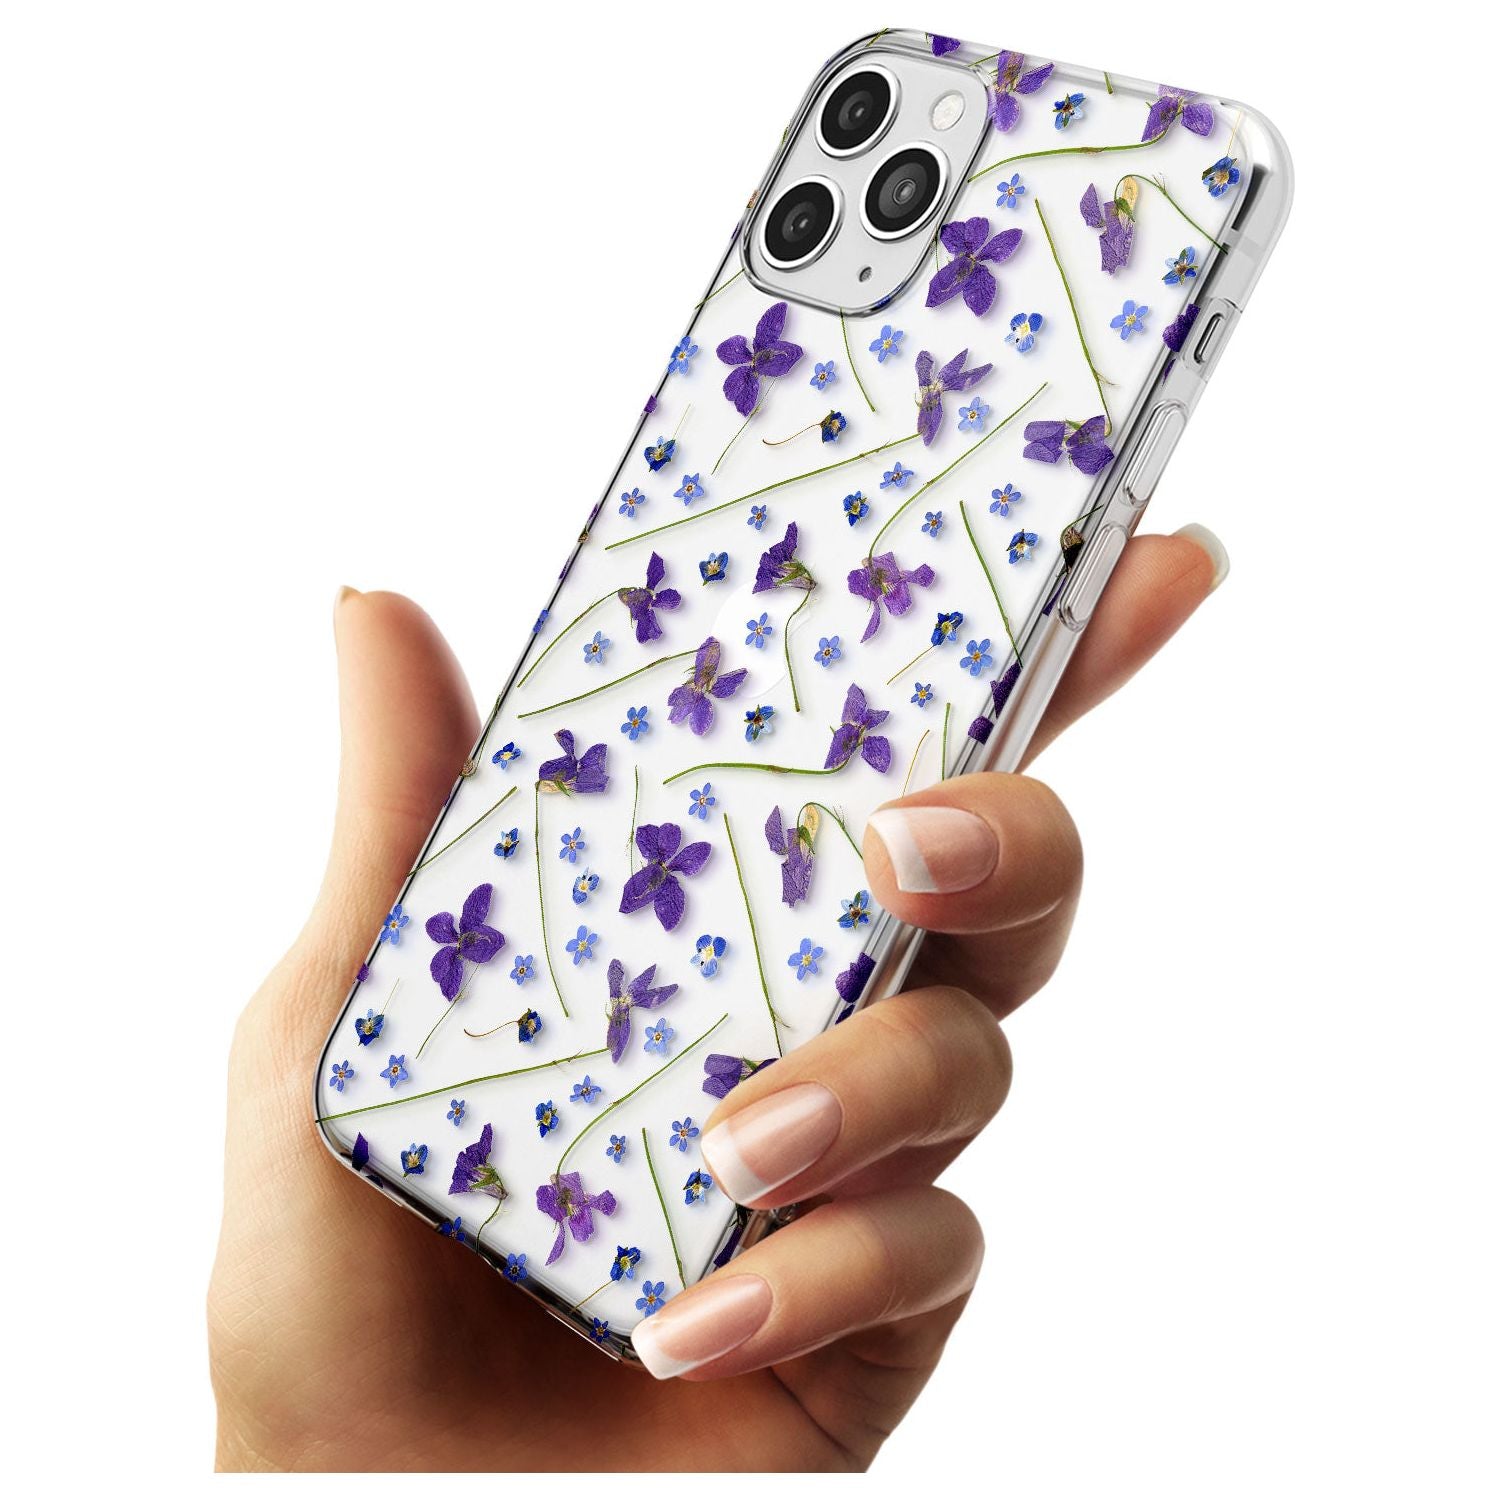 Violet & Blue Floral Pattern Design Slim TPU Phone Case for iPhone 11 Pro Max